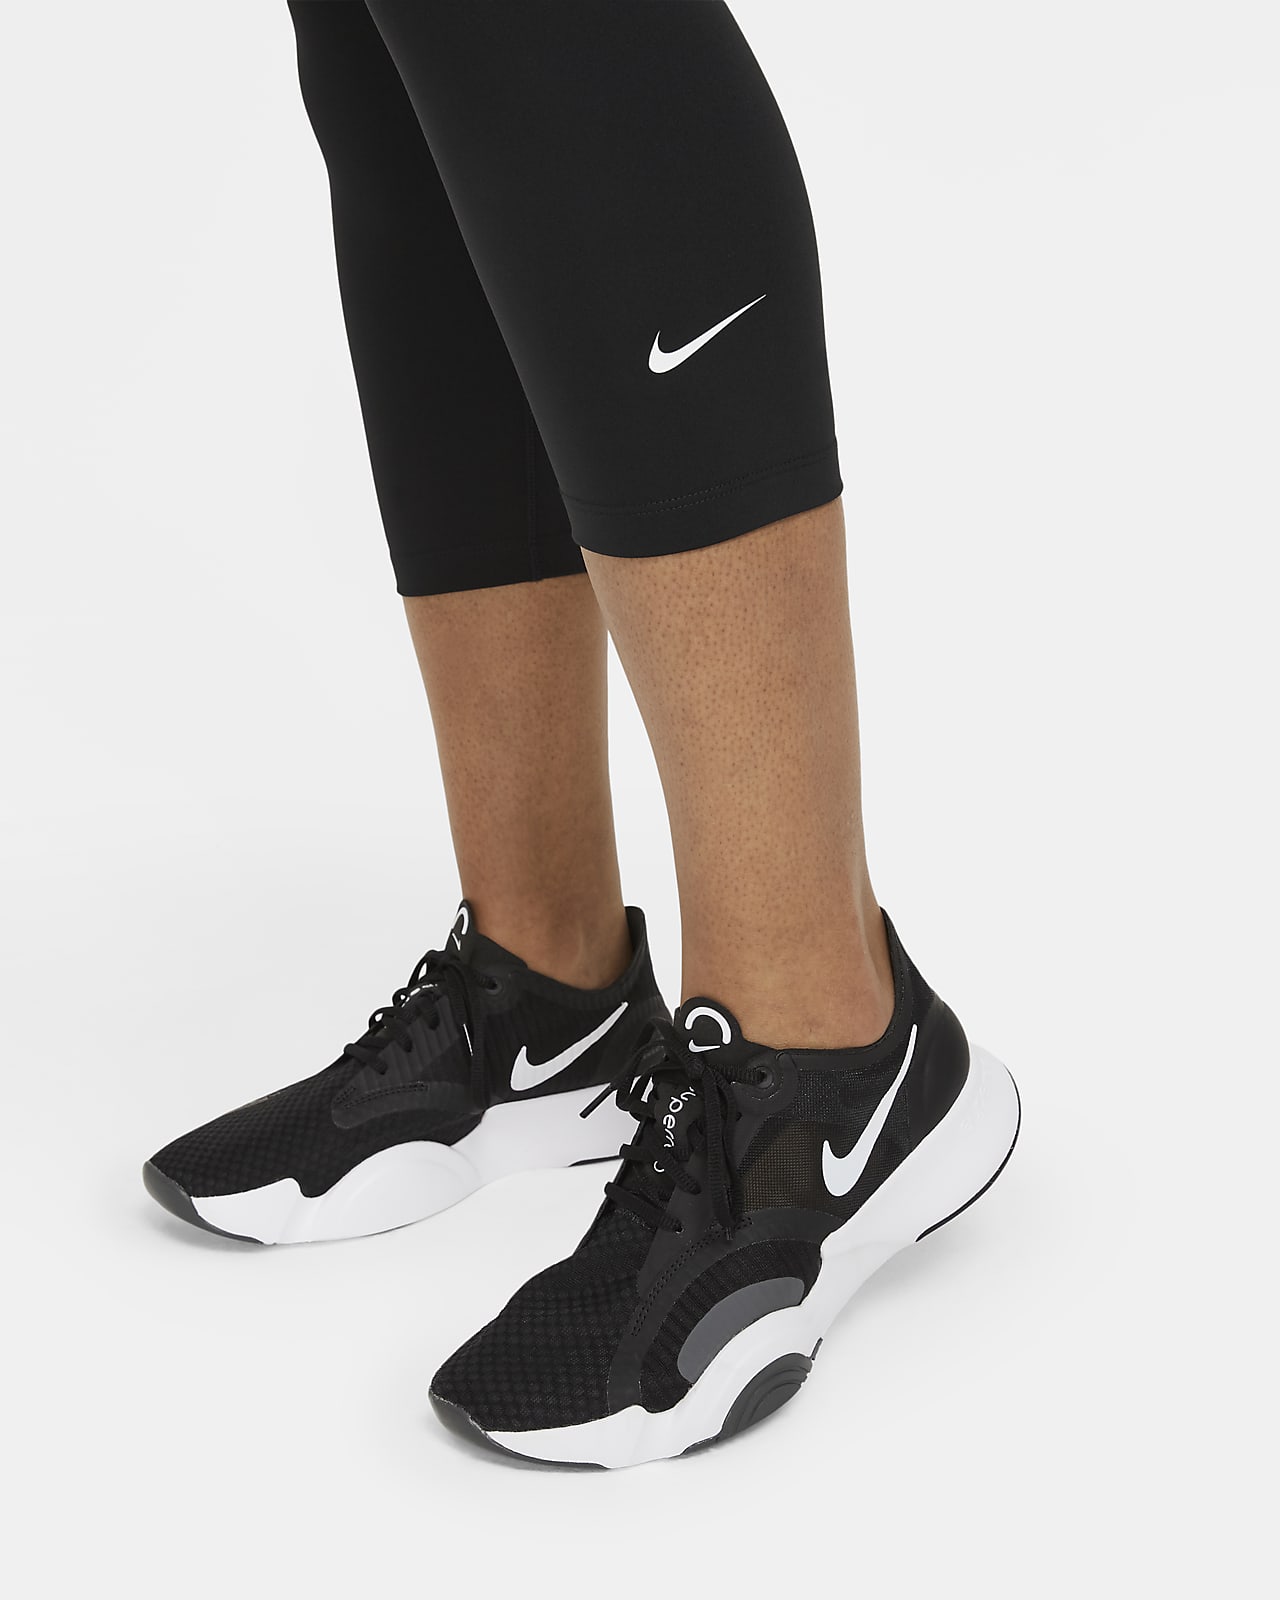 Nike Pro Training capri leggings in black